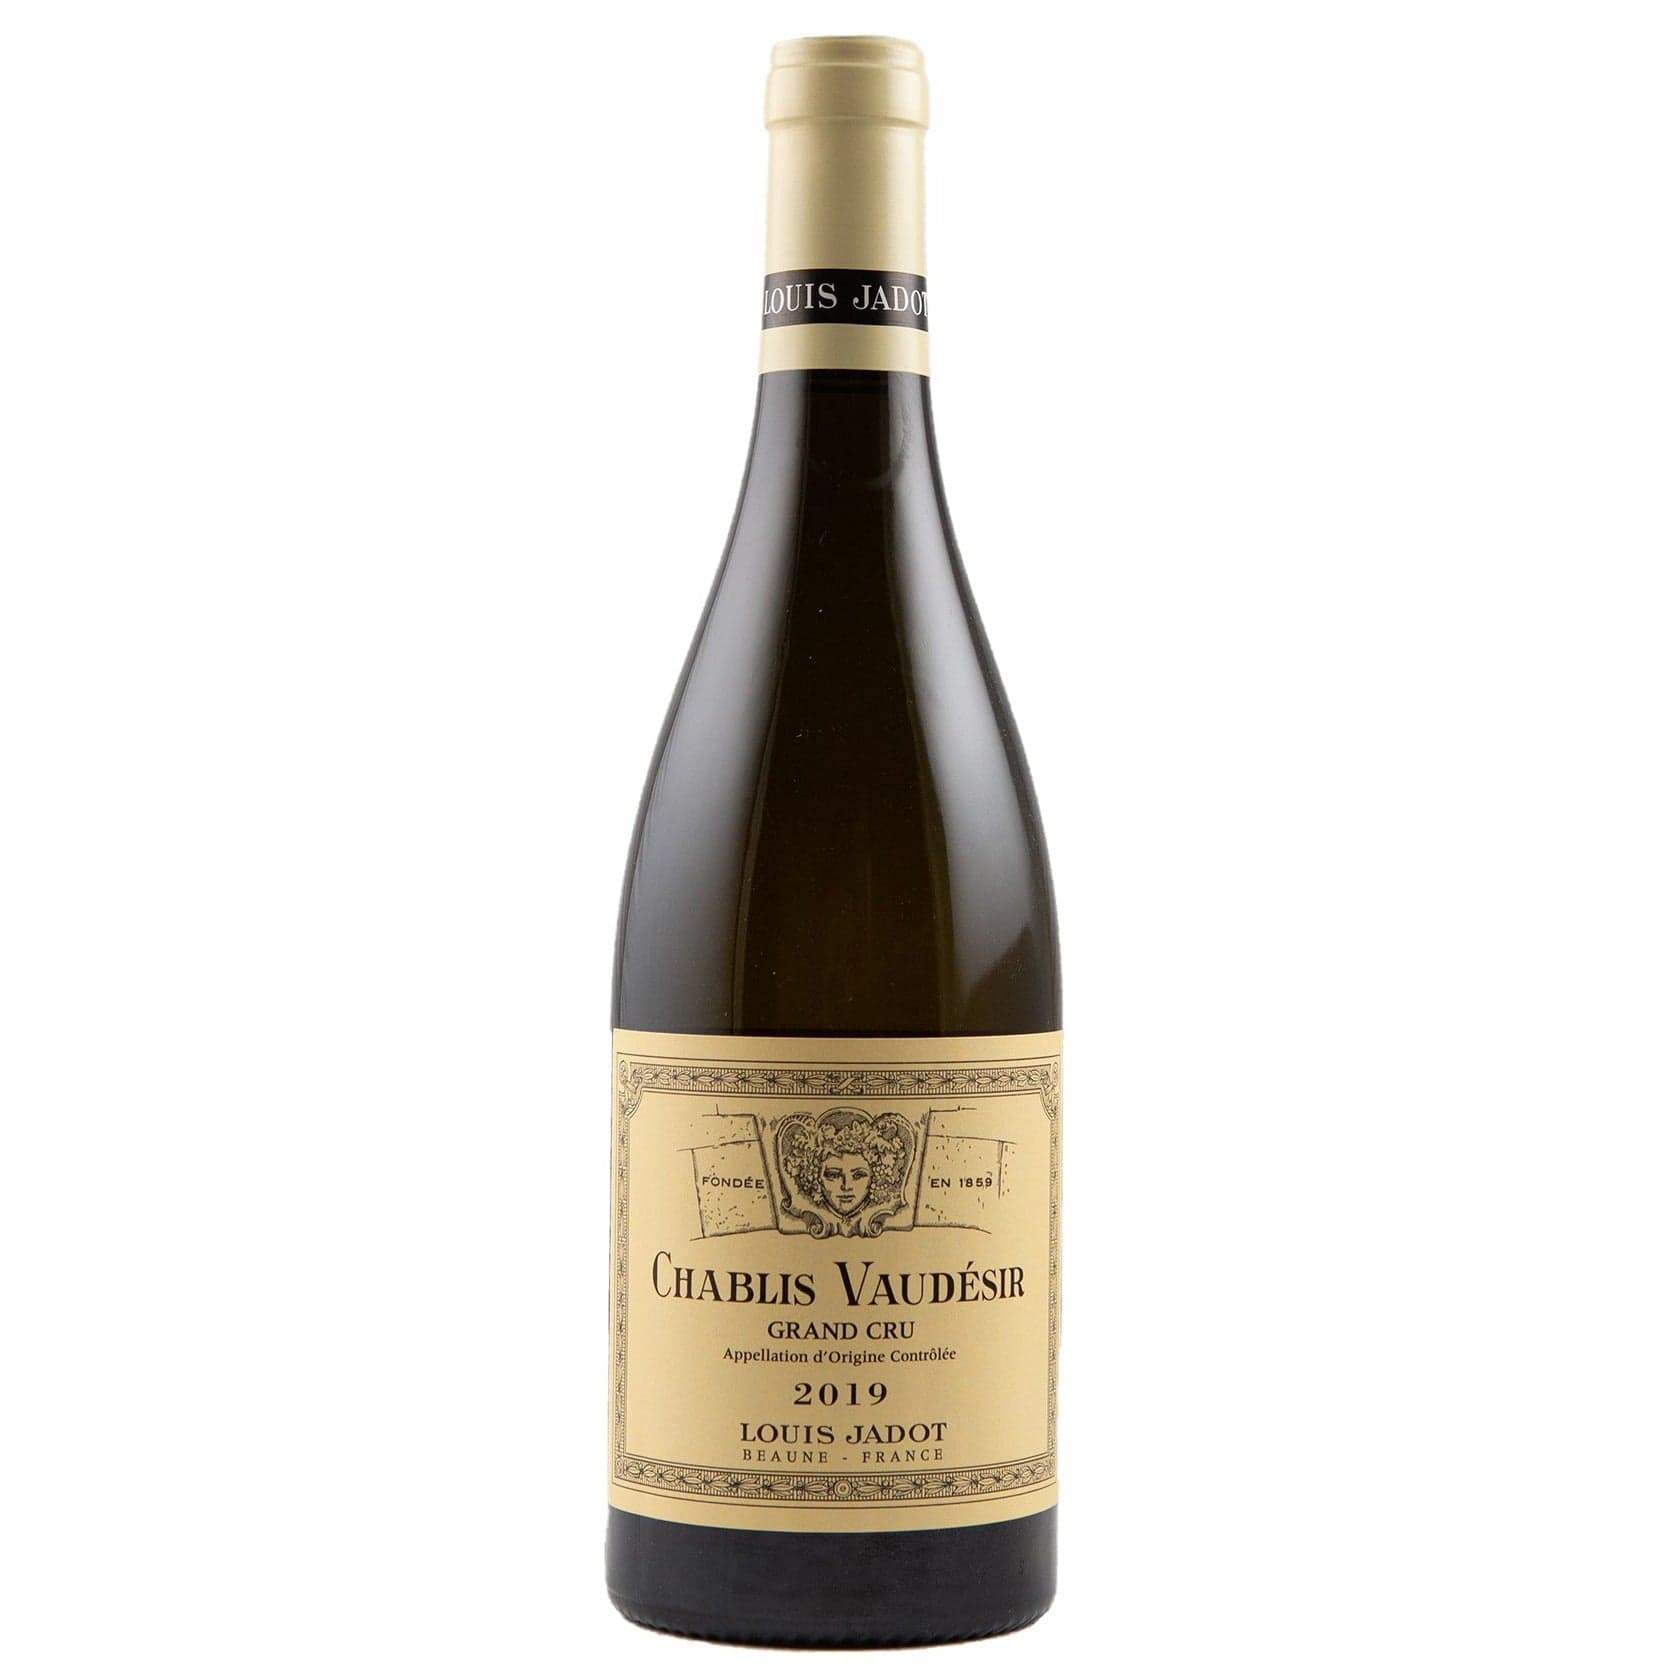 Single bottle of White wine Louis Jadot, Chablis Vaudesir Grand Cru, Chablis, 2019 100% Chardonnay